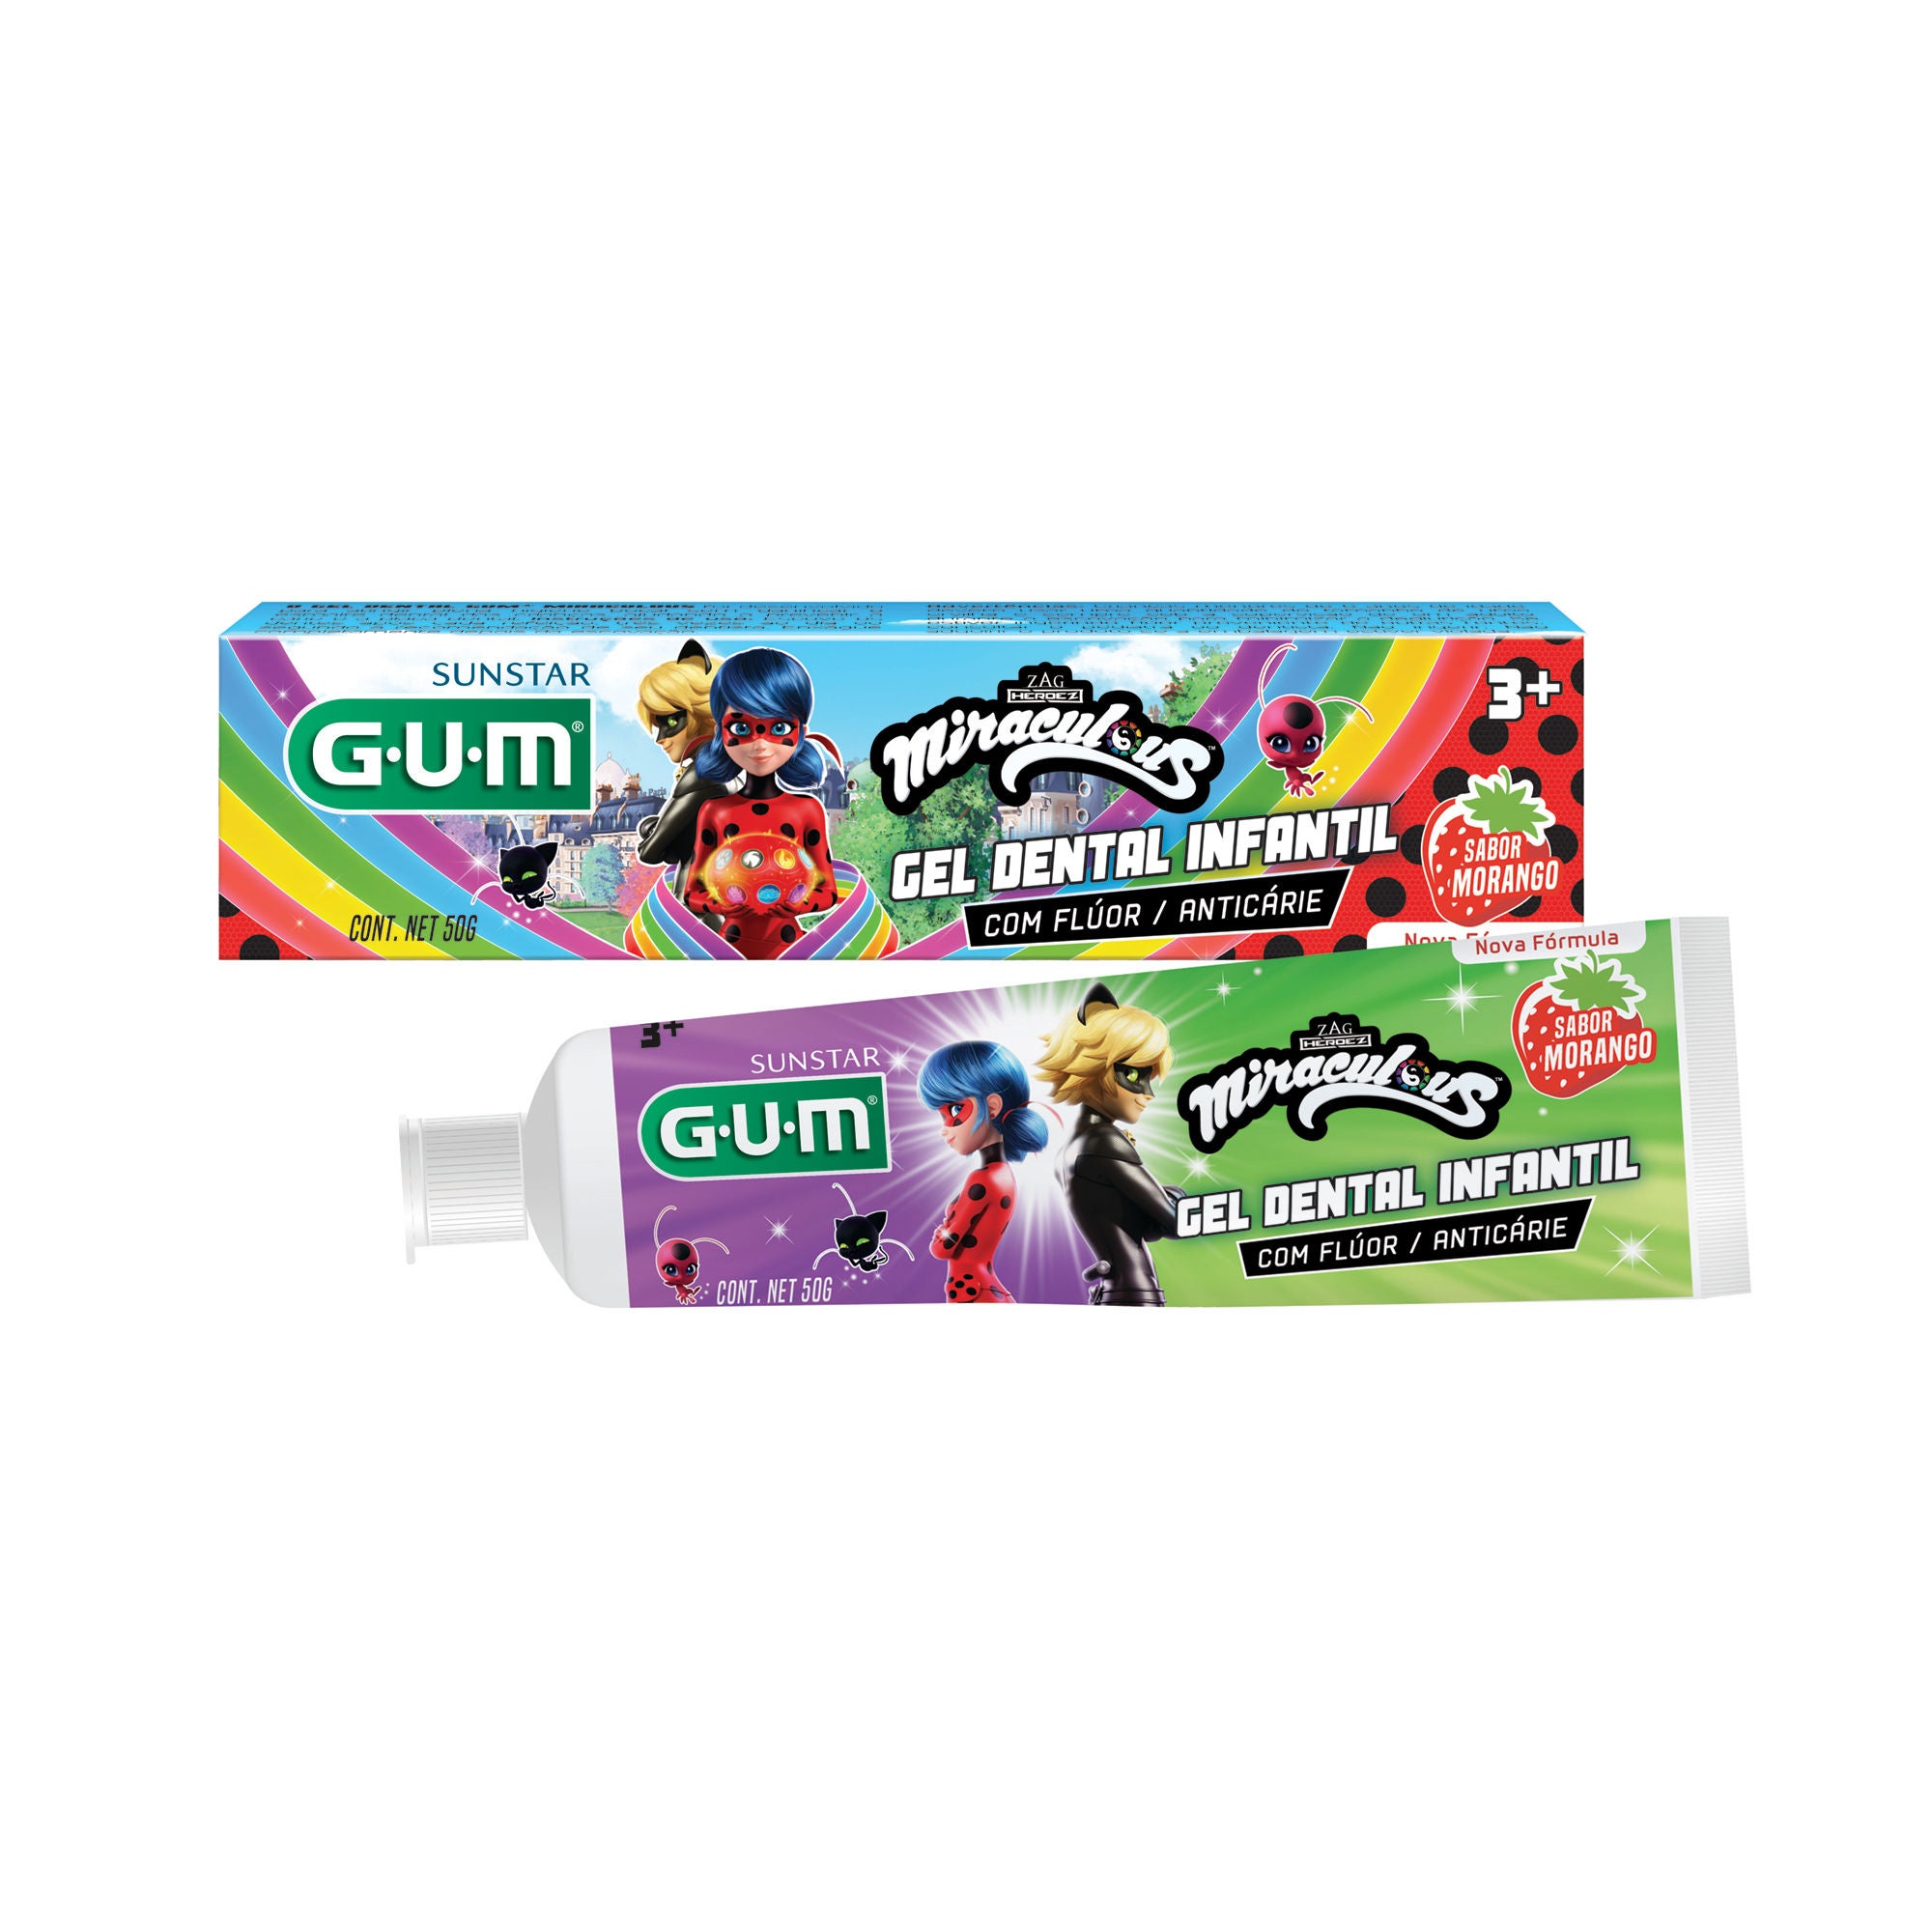 1321BUGBR-Product-Packaging-Toothpaste-Ladybug-front-50g.jpg